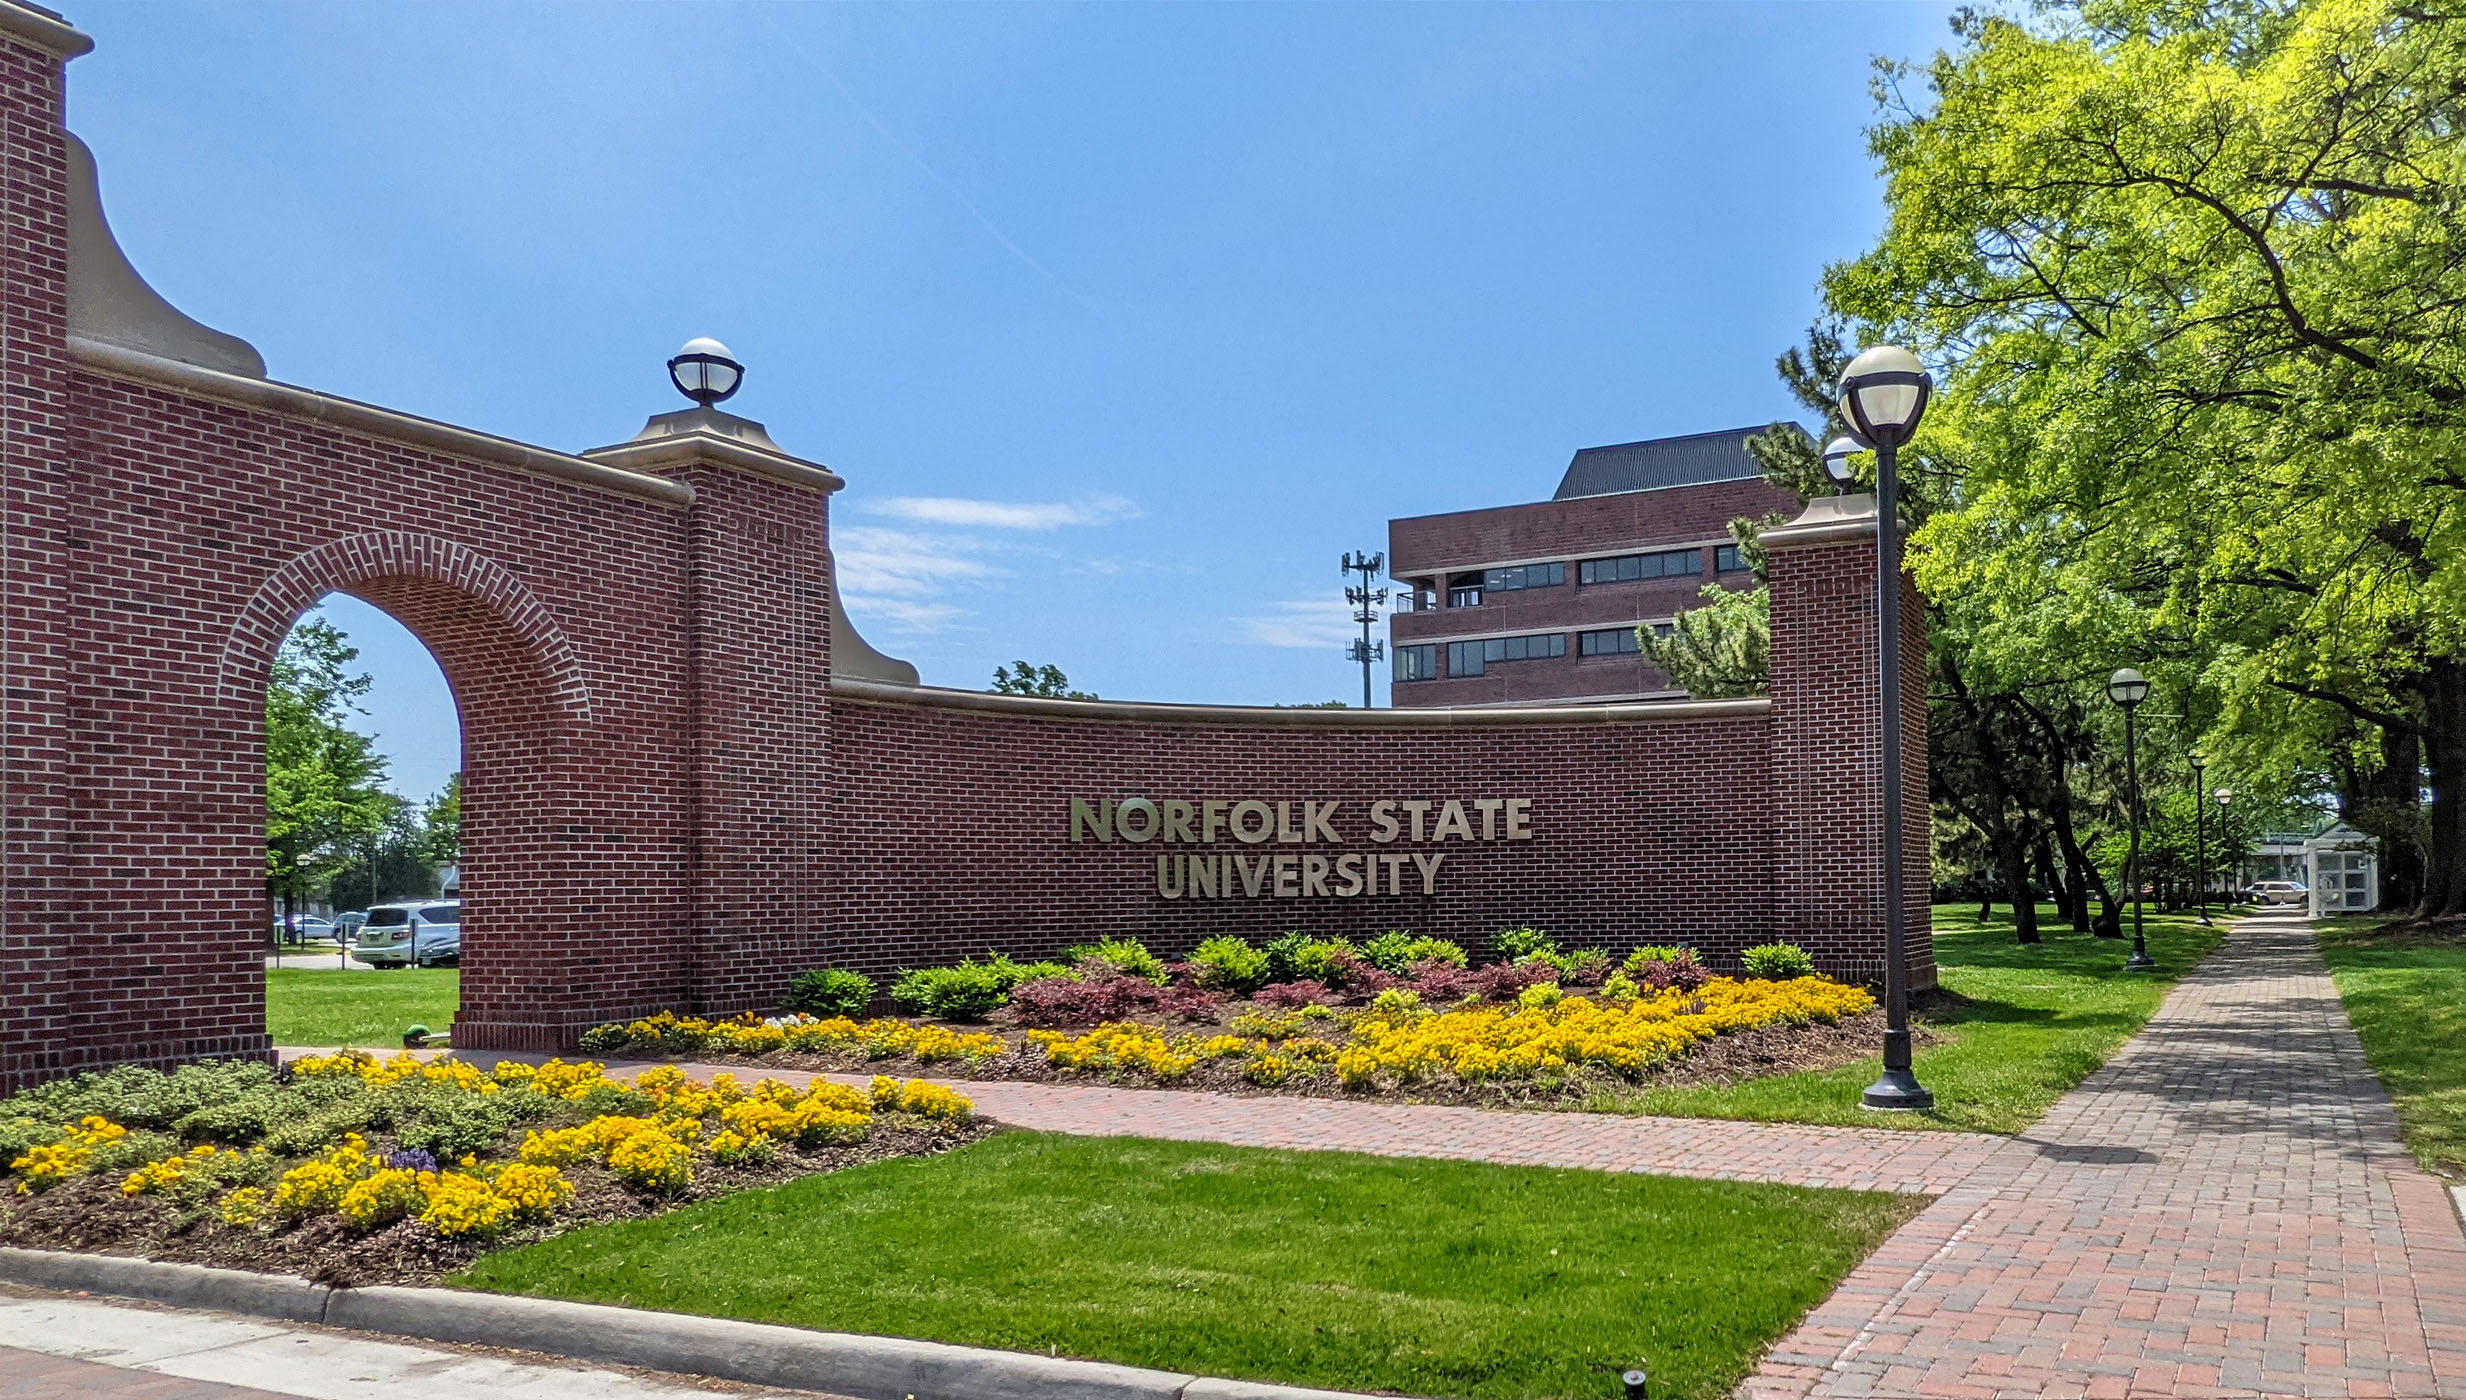 Norfolk State University Main Gate